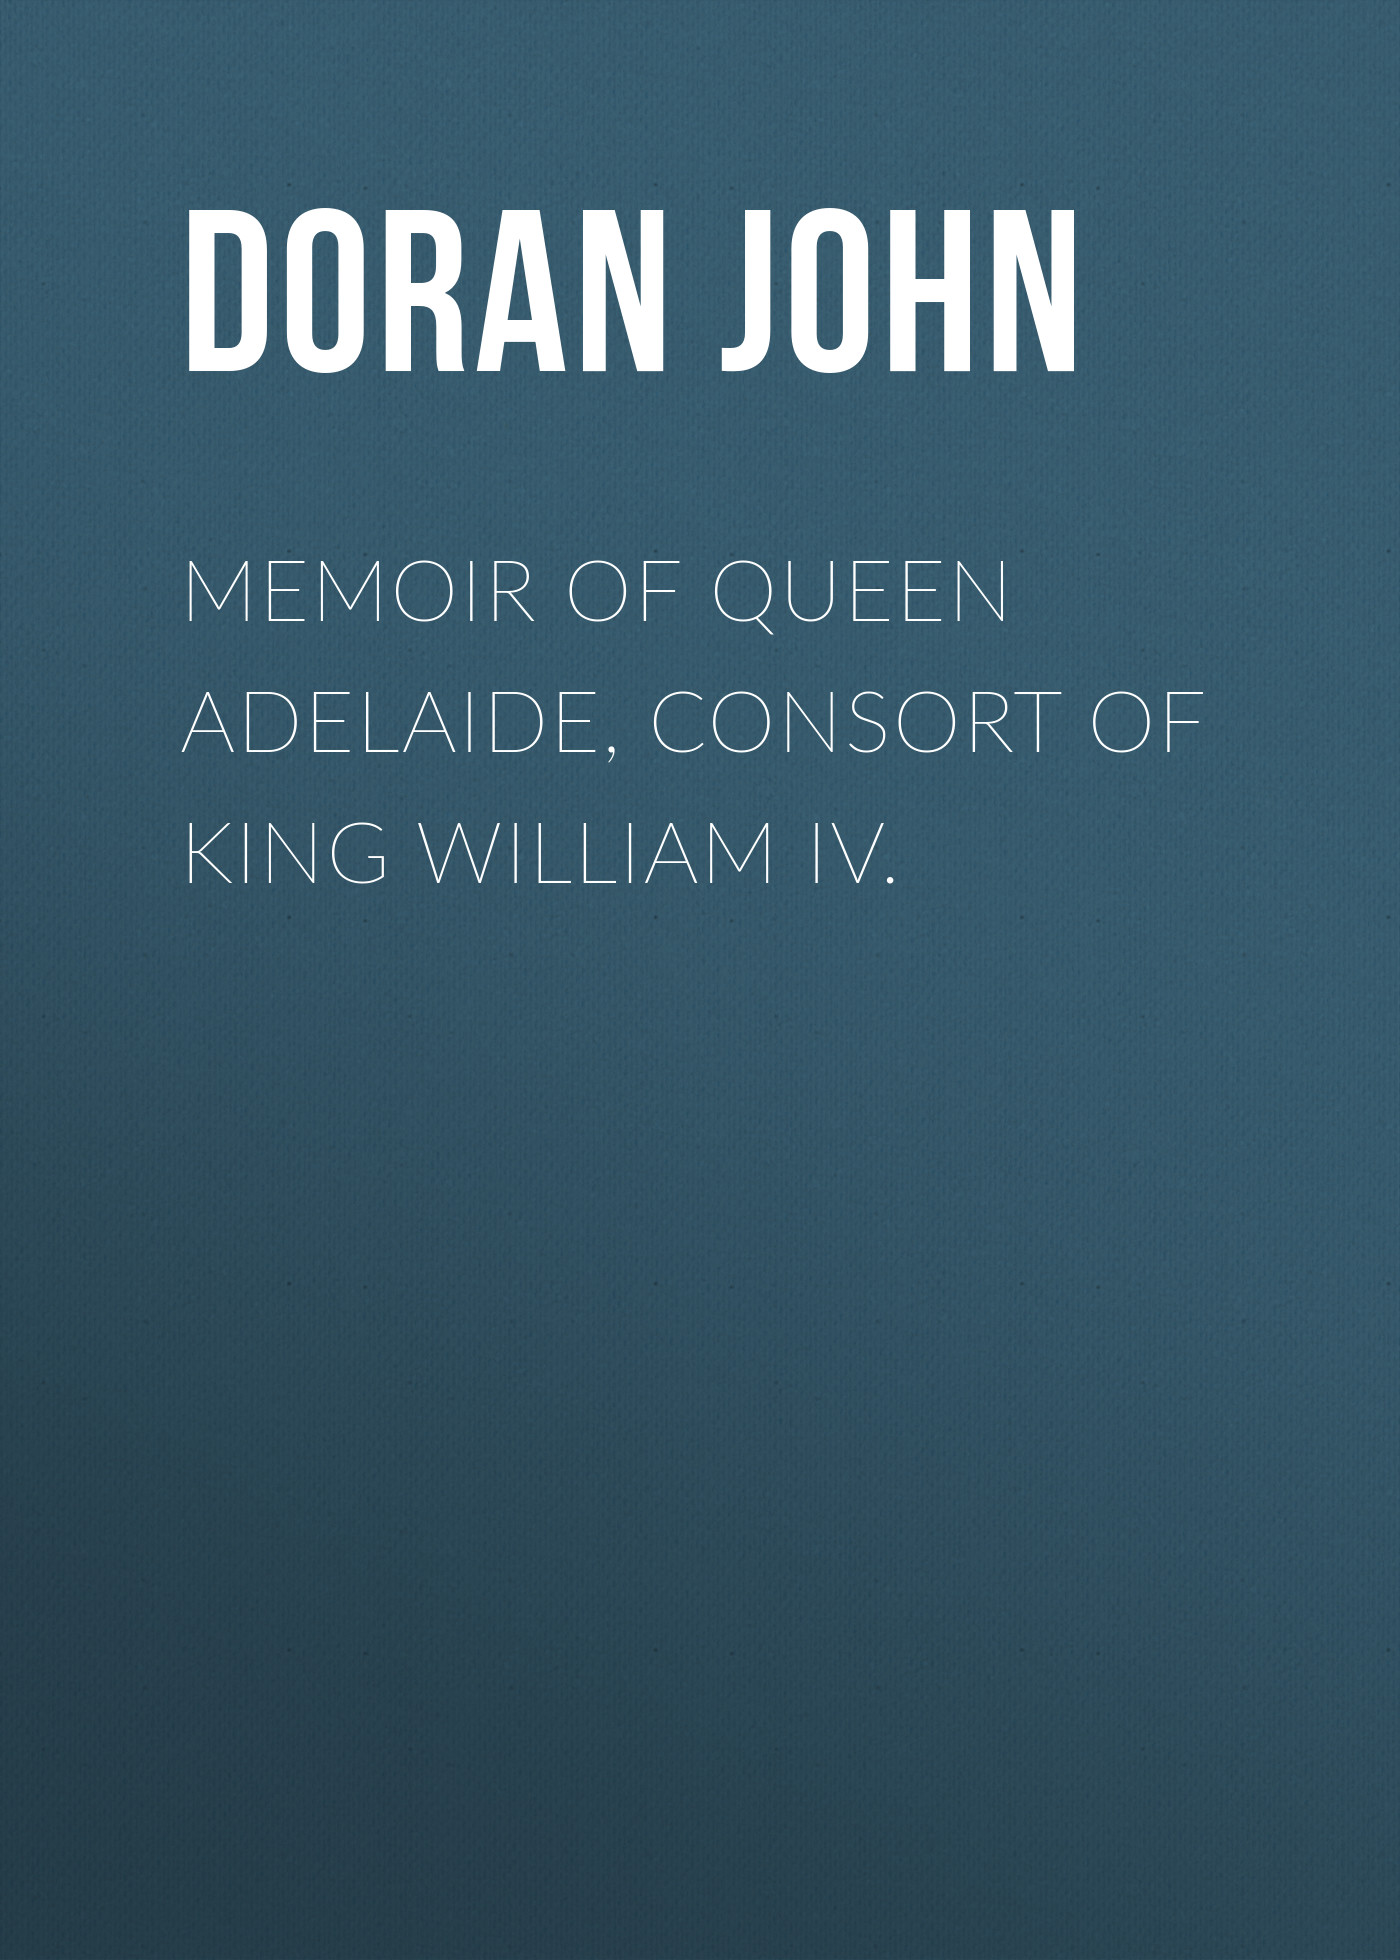 Memoir of Queen Adelaide, Consort of King William IV.